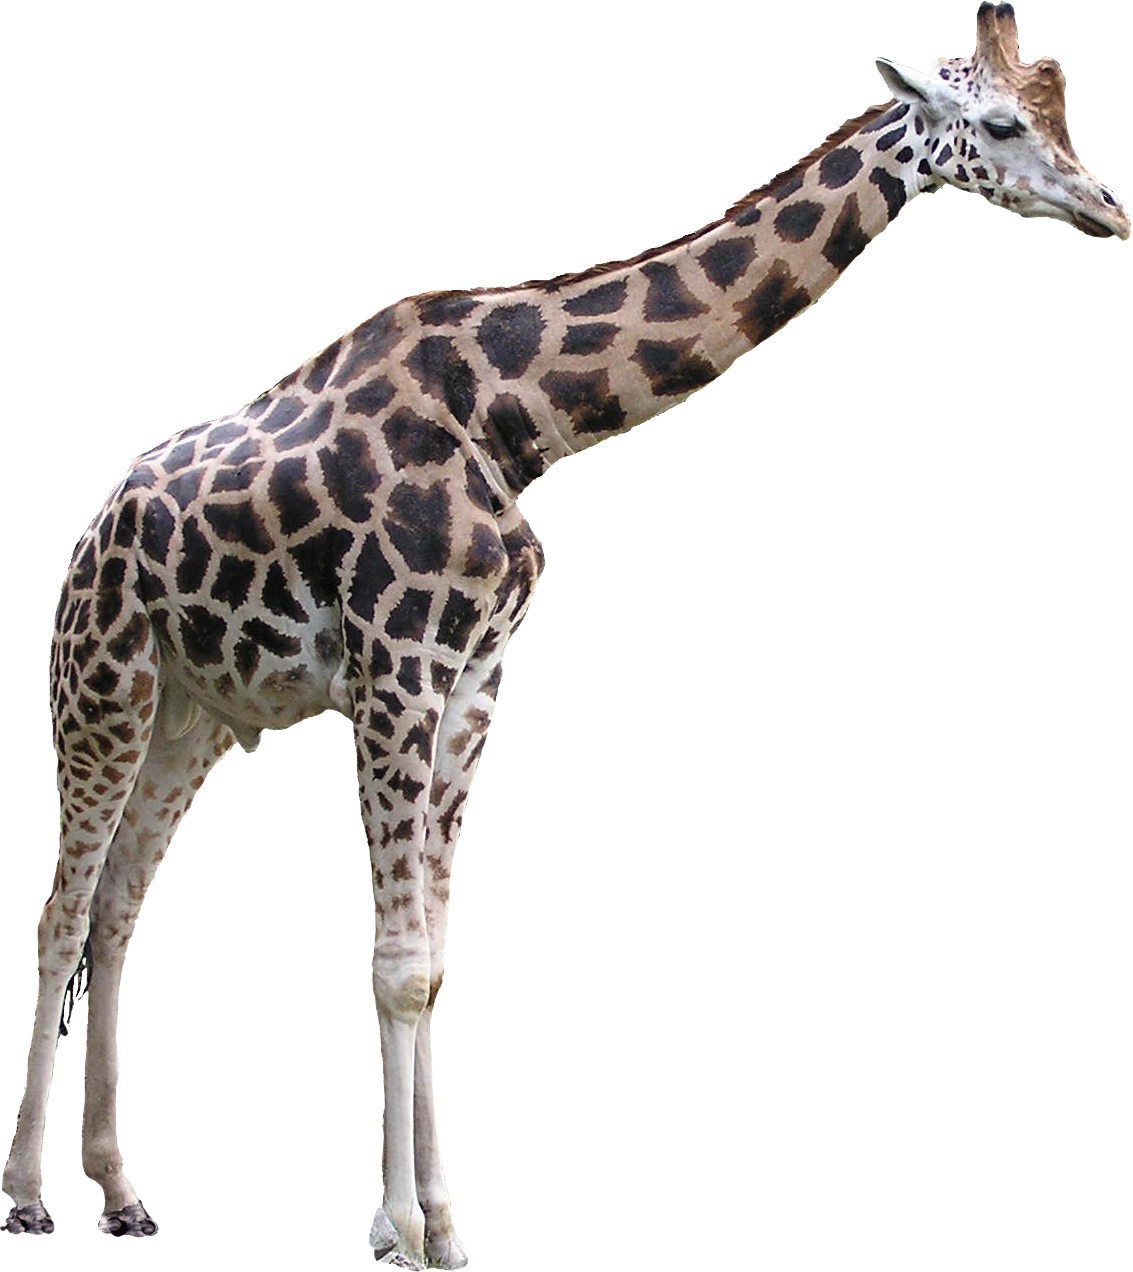 Giraffe PNG images Download